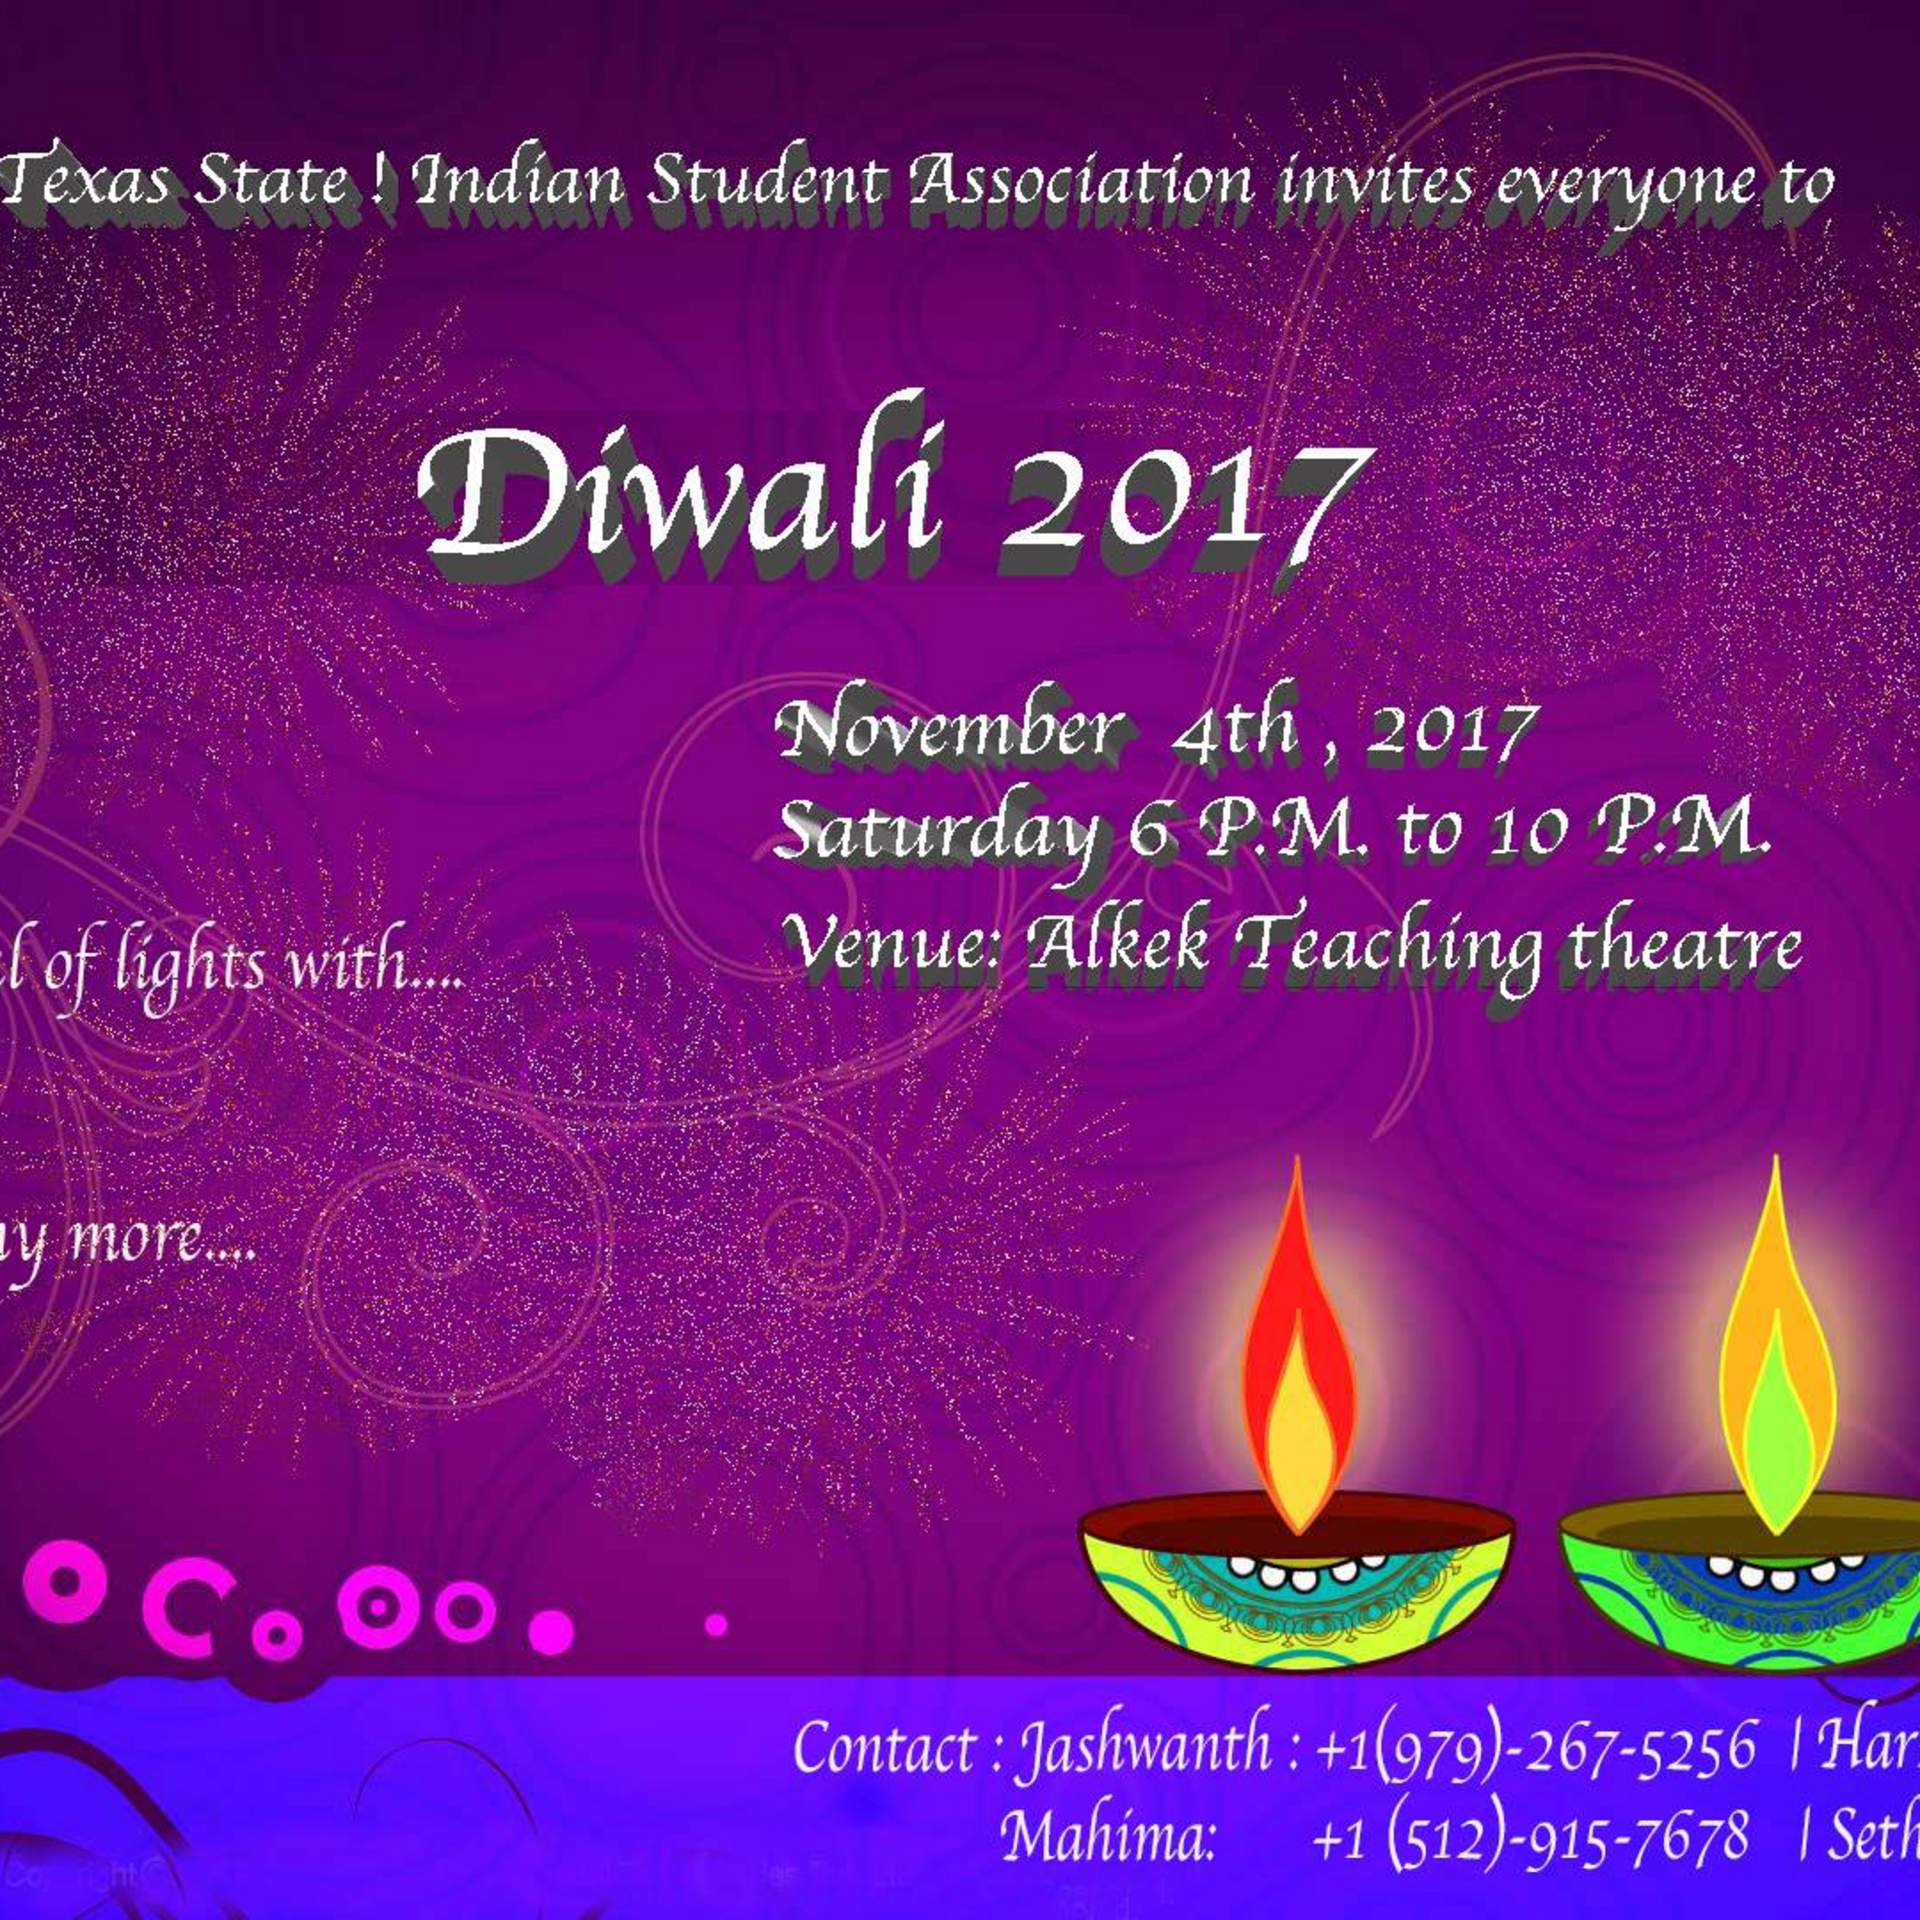 Diwali 2017 flyer. Novemeber 4, 2017.